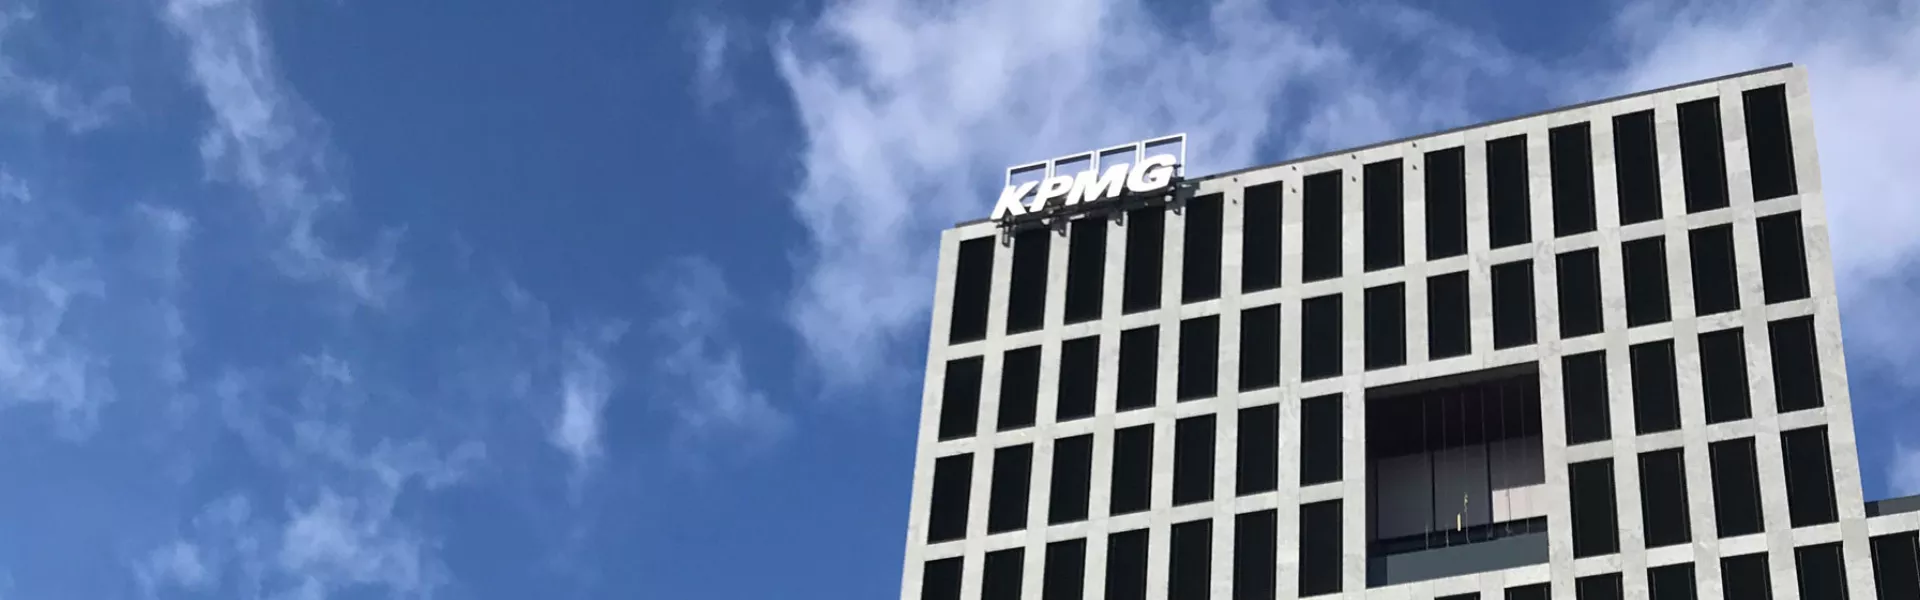 Digital Finance Transformation at KPMG Germany